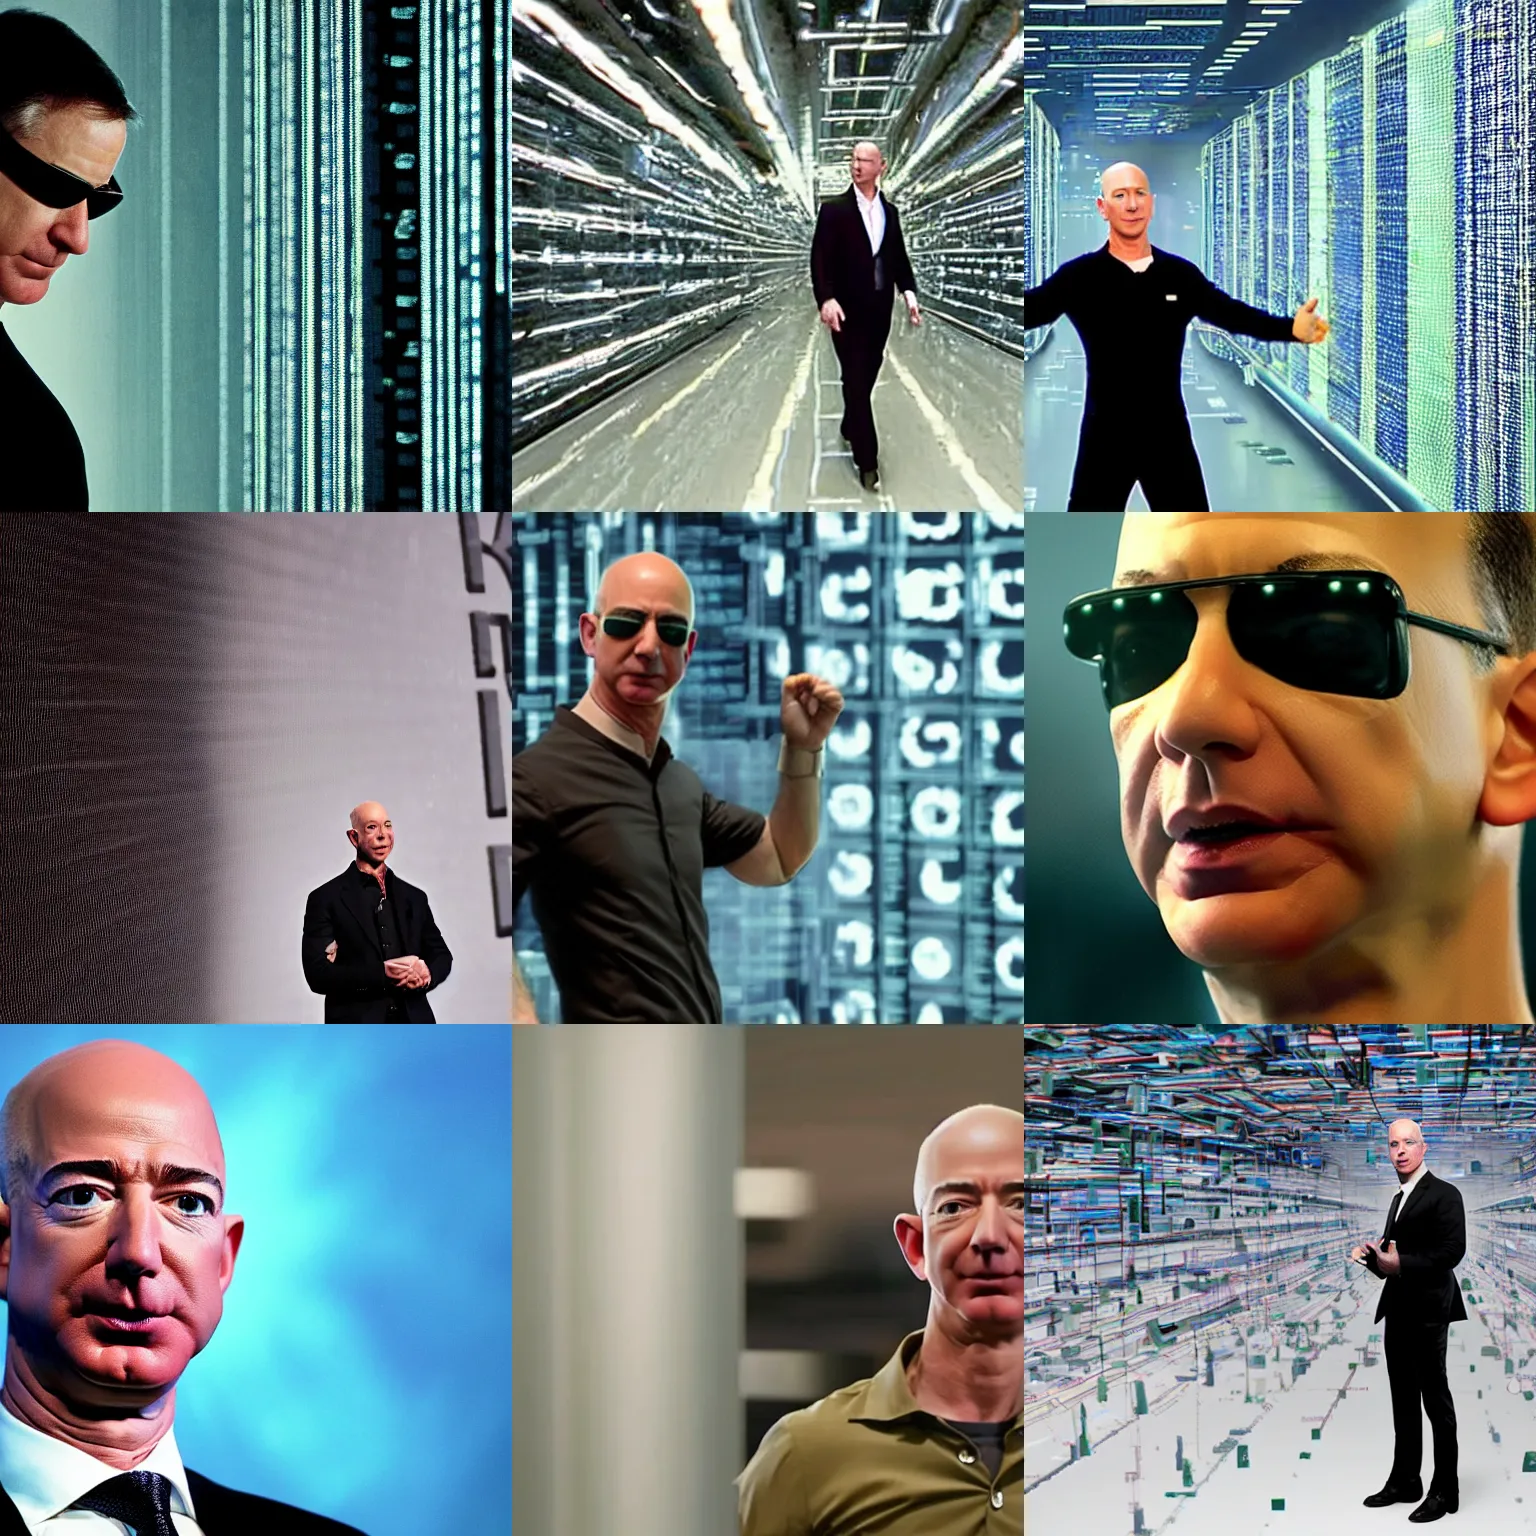 Prompt: A still of Jeff Bezos in The Matrix